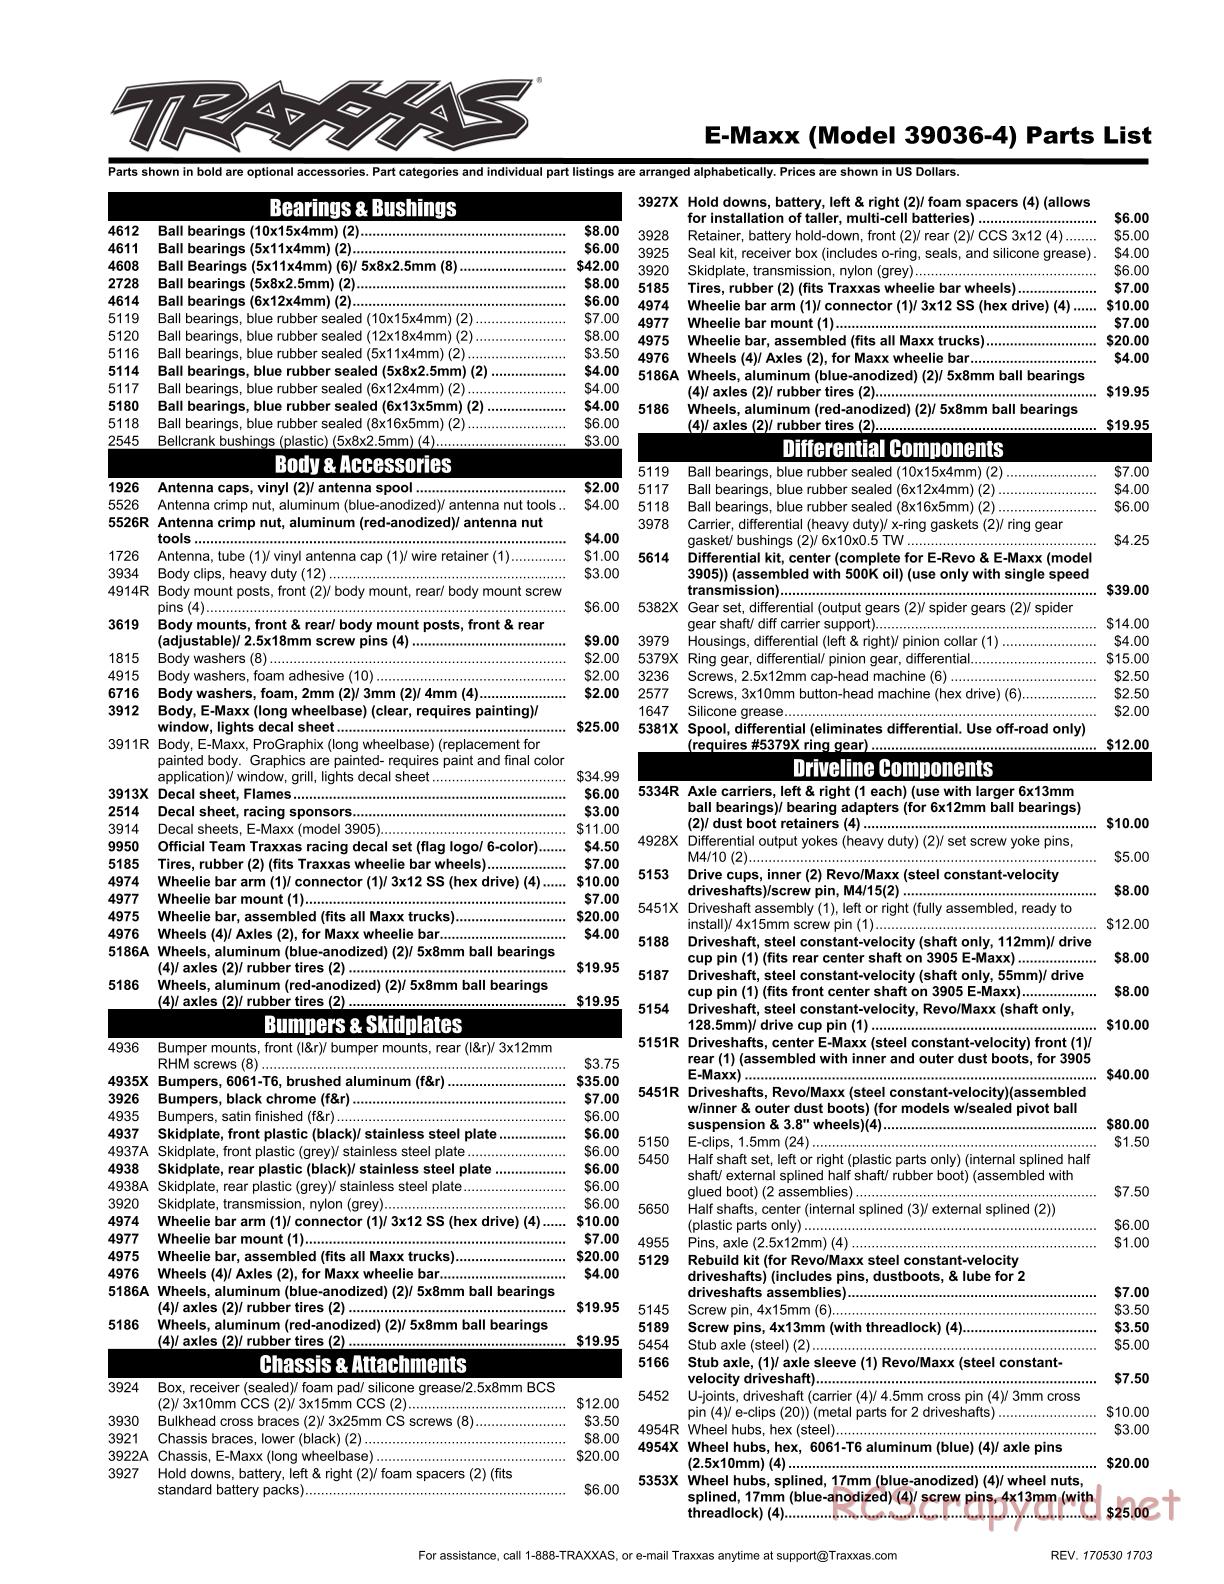 Traxxas - E-Maxx TSM (2016) - Parts List - Page 1